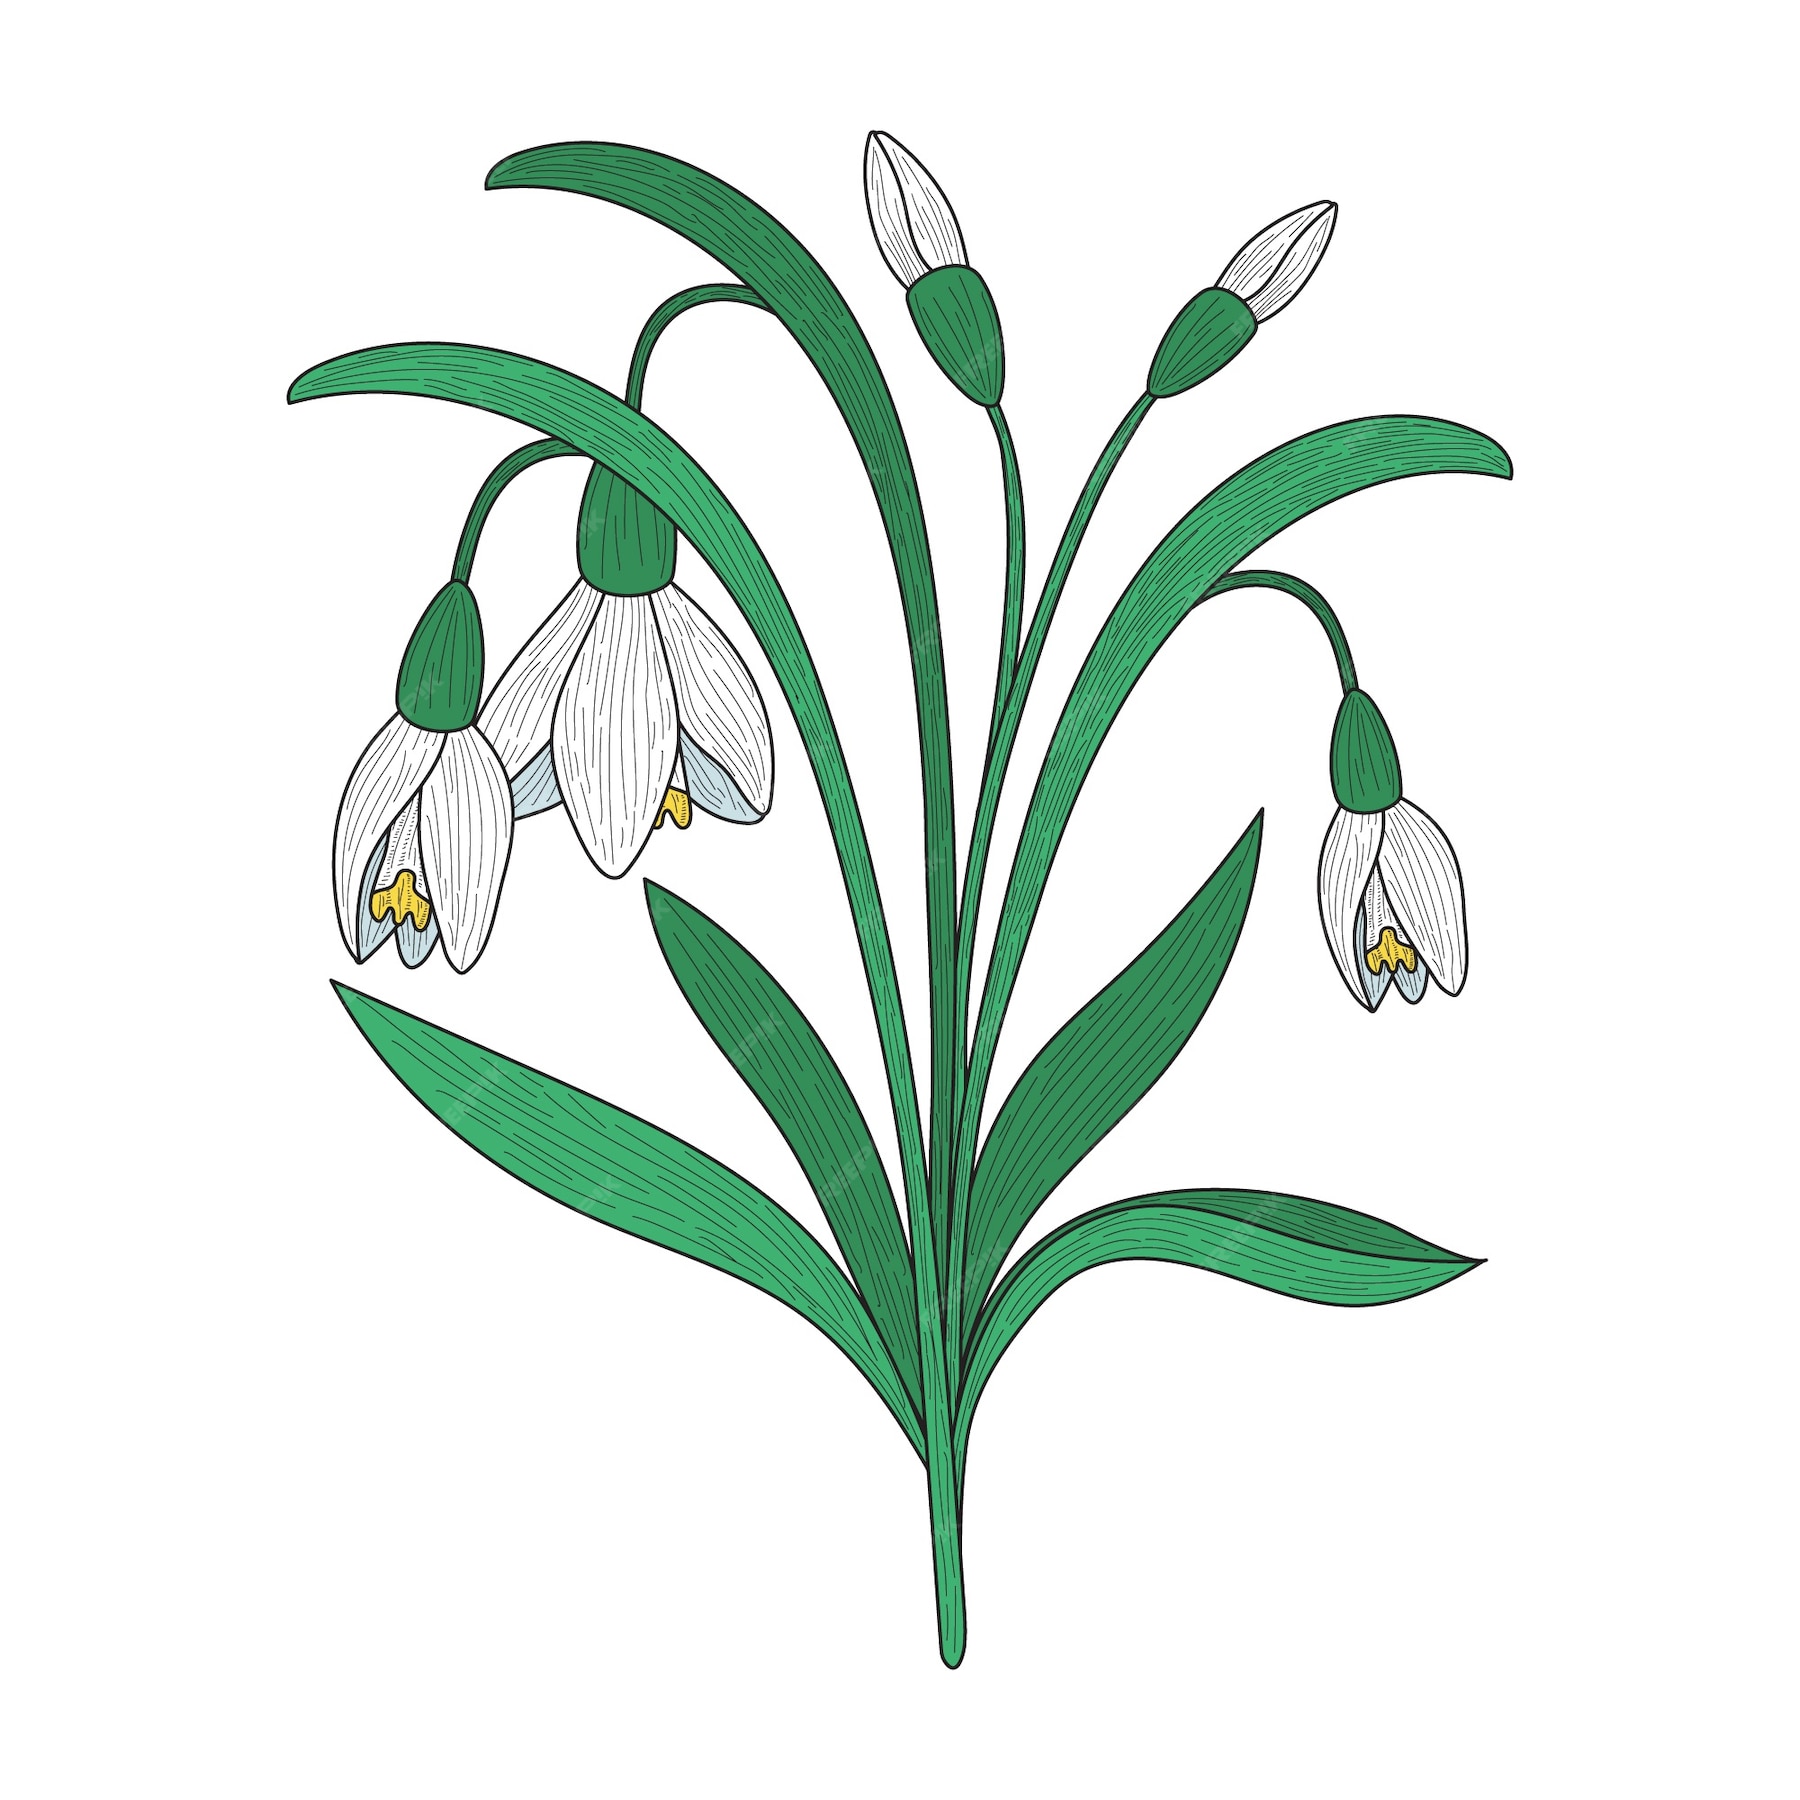 Free Vector Hand drawn snowdrop flower illustration